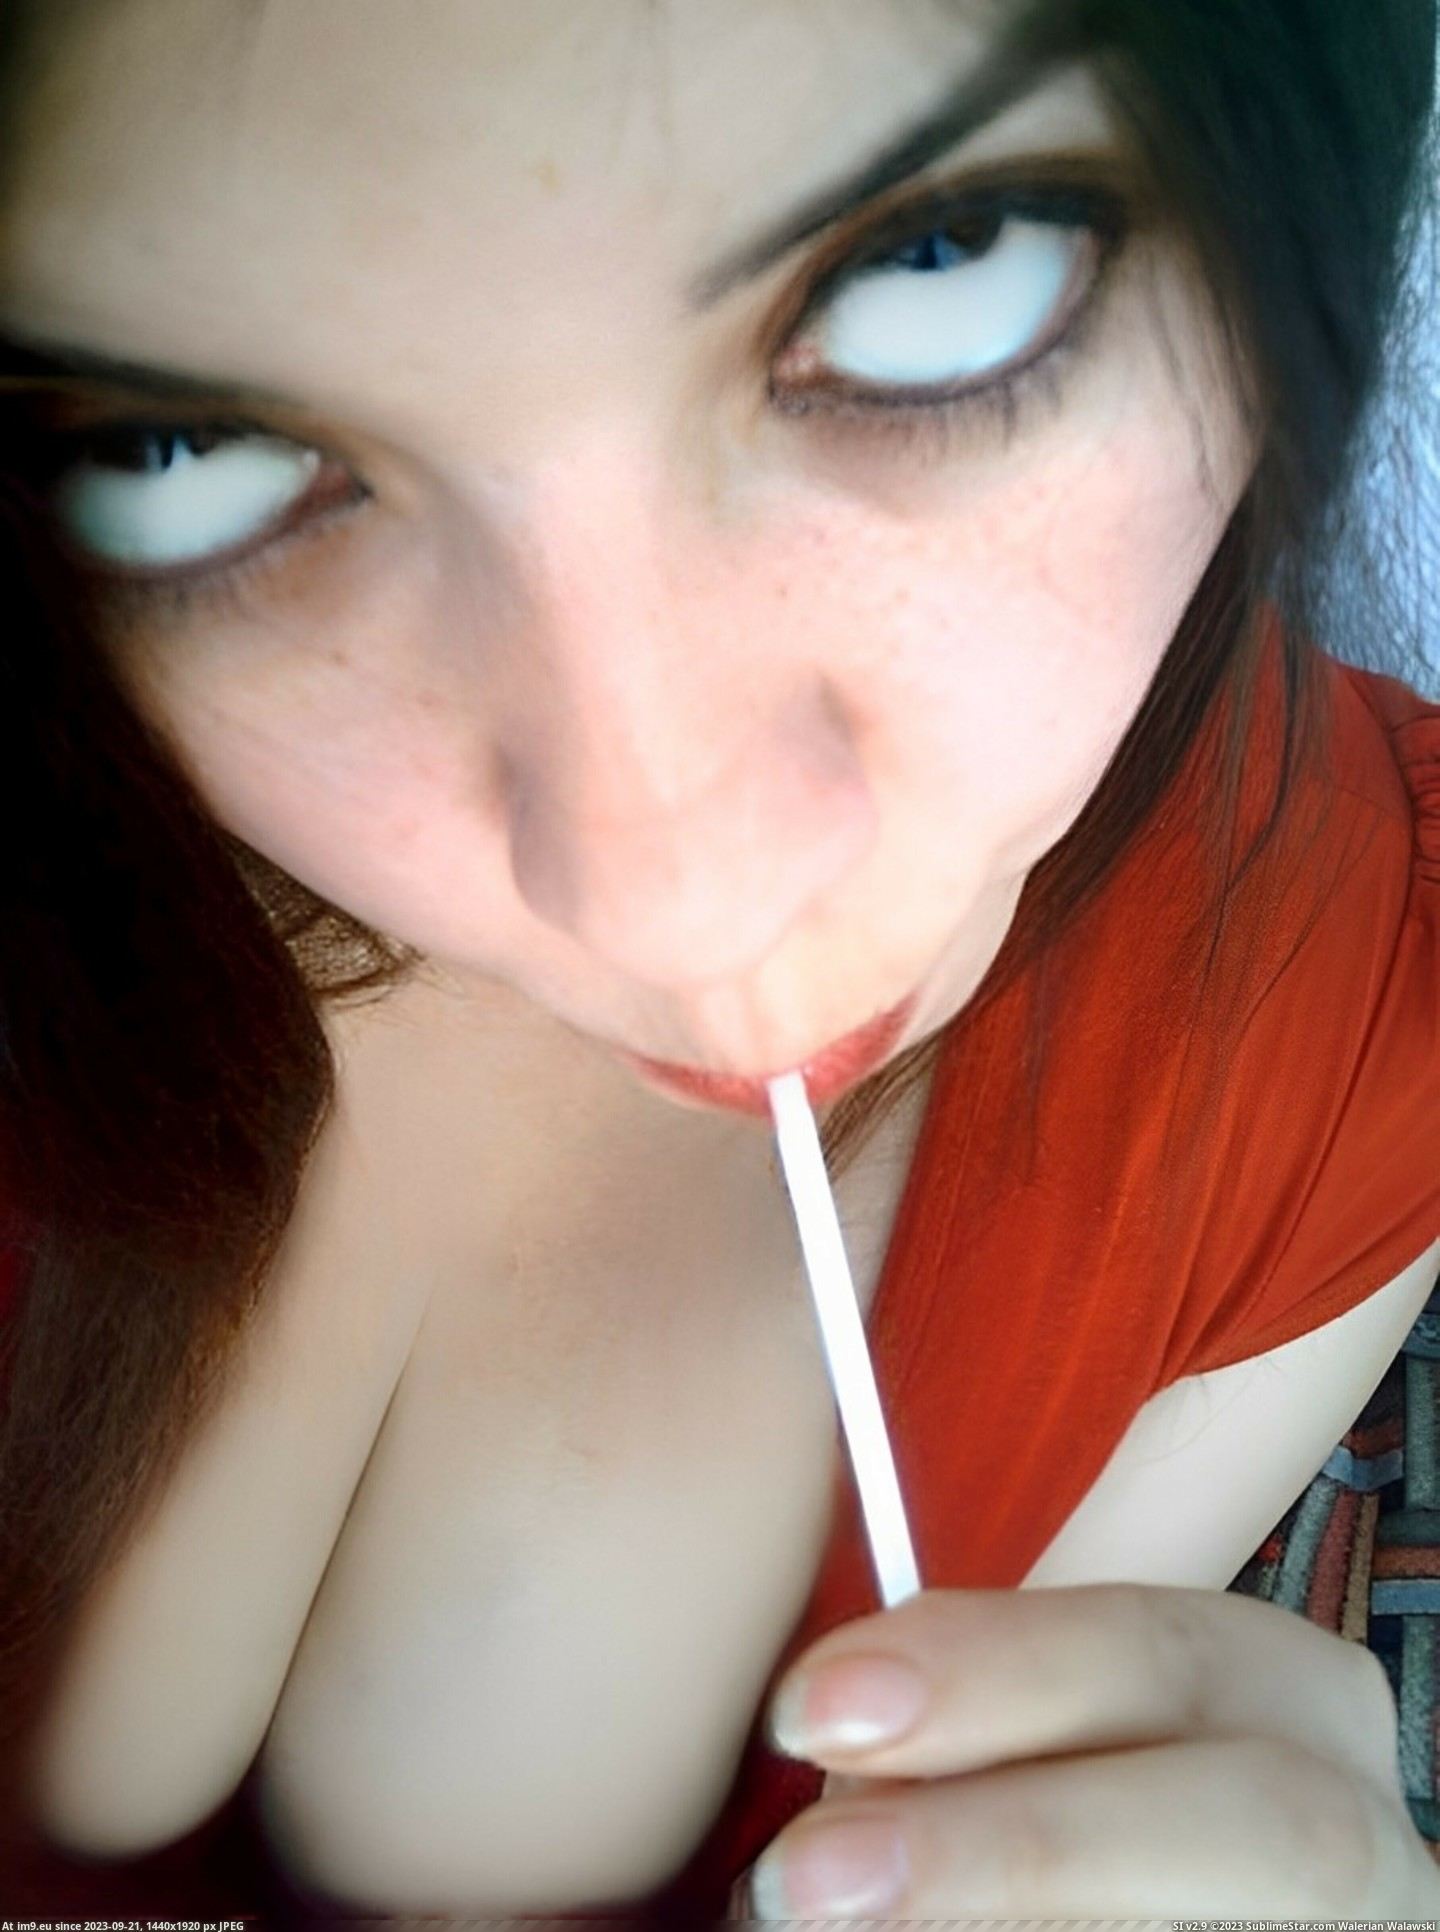 #Orgasm #Carolina #Putabarata #Lollipop #Bellota Carolina Bellota lollipop Pic. (Image of album Instant Upload))